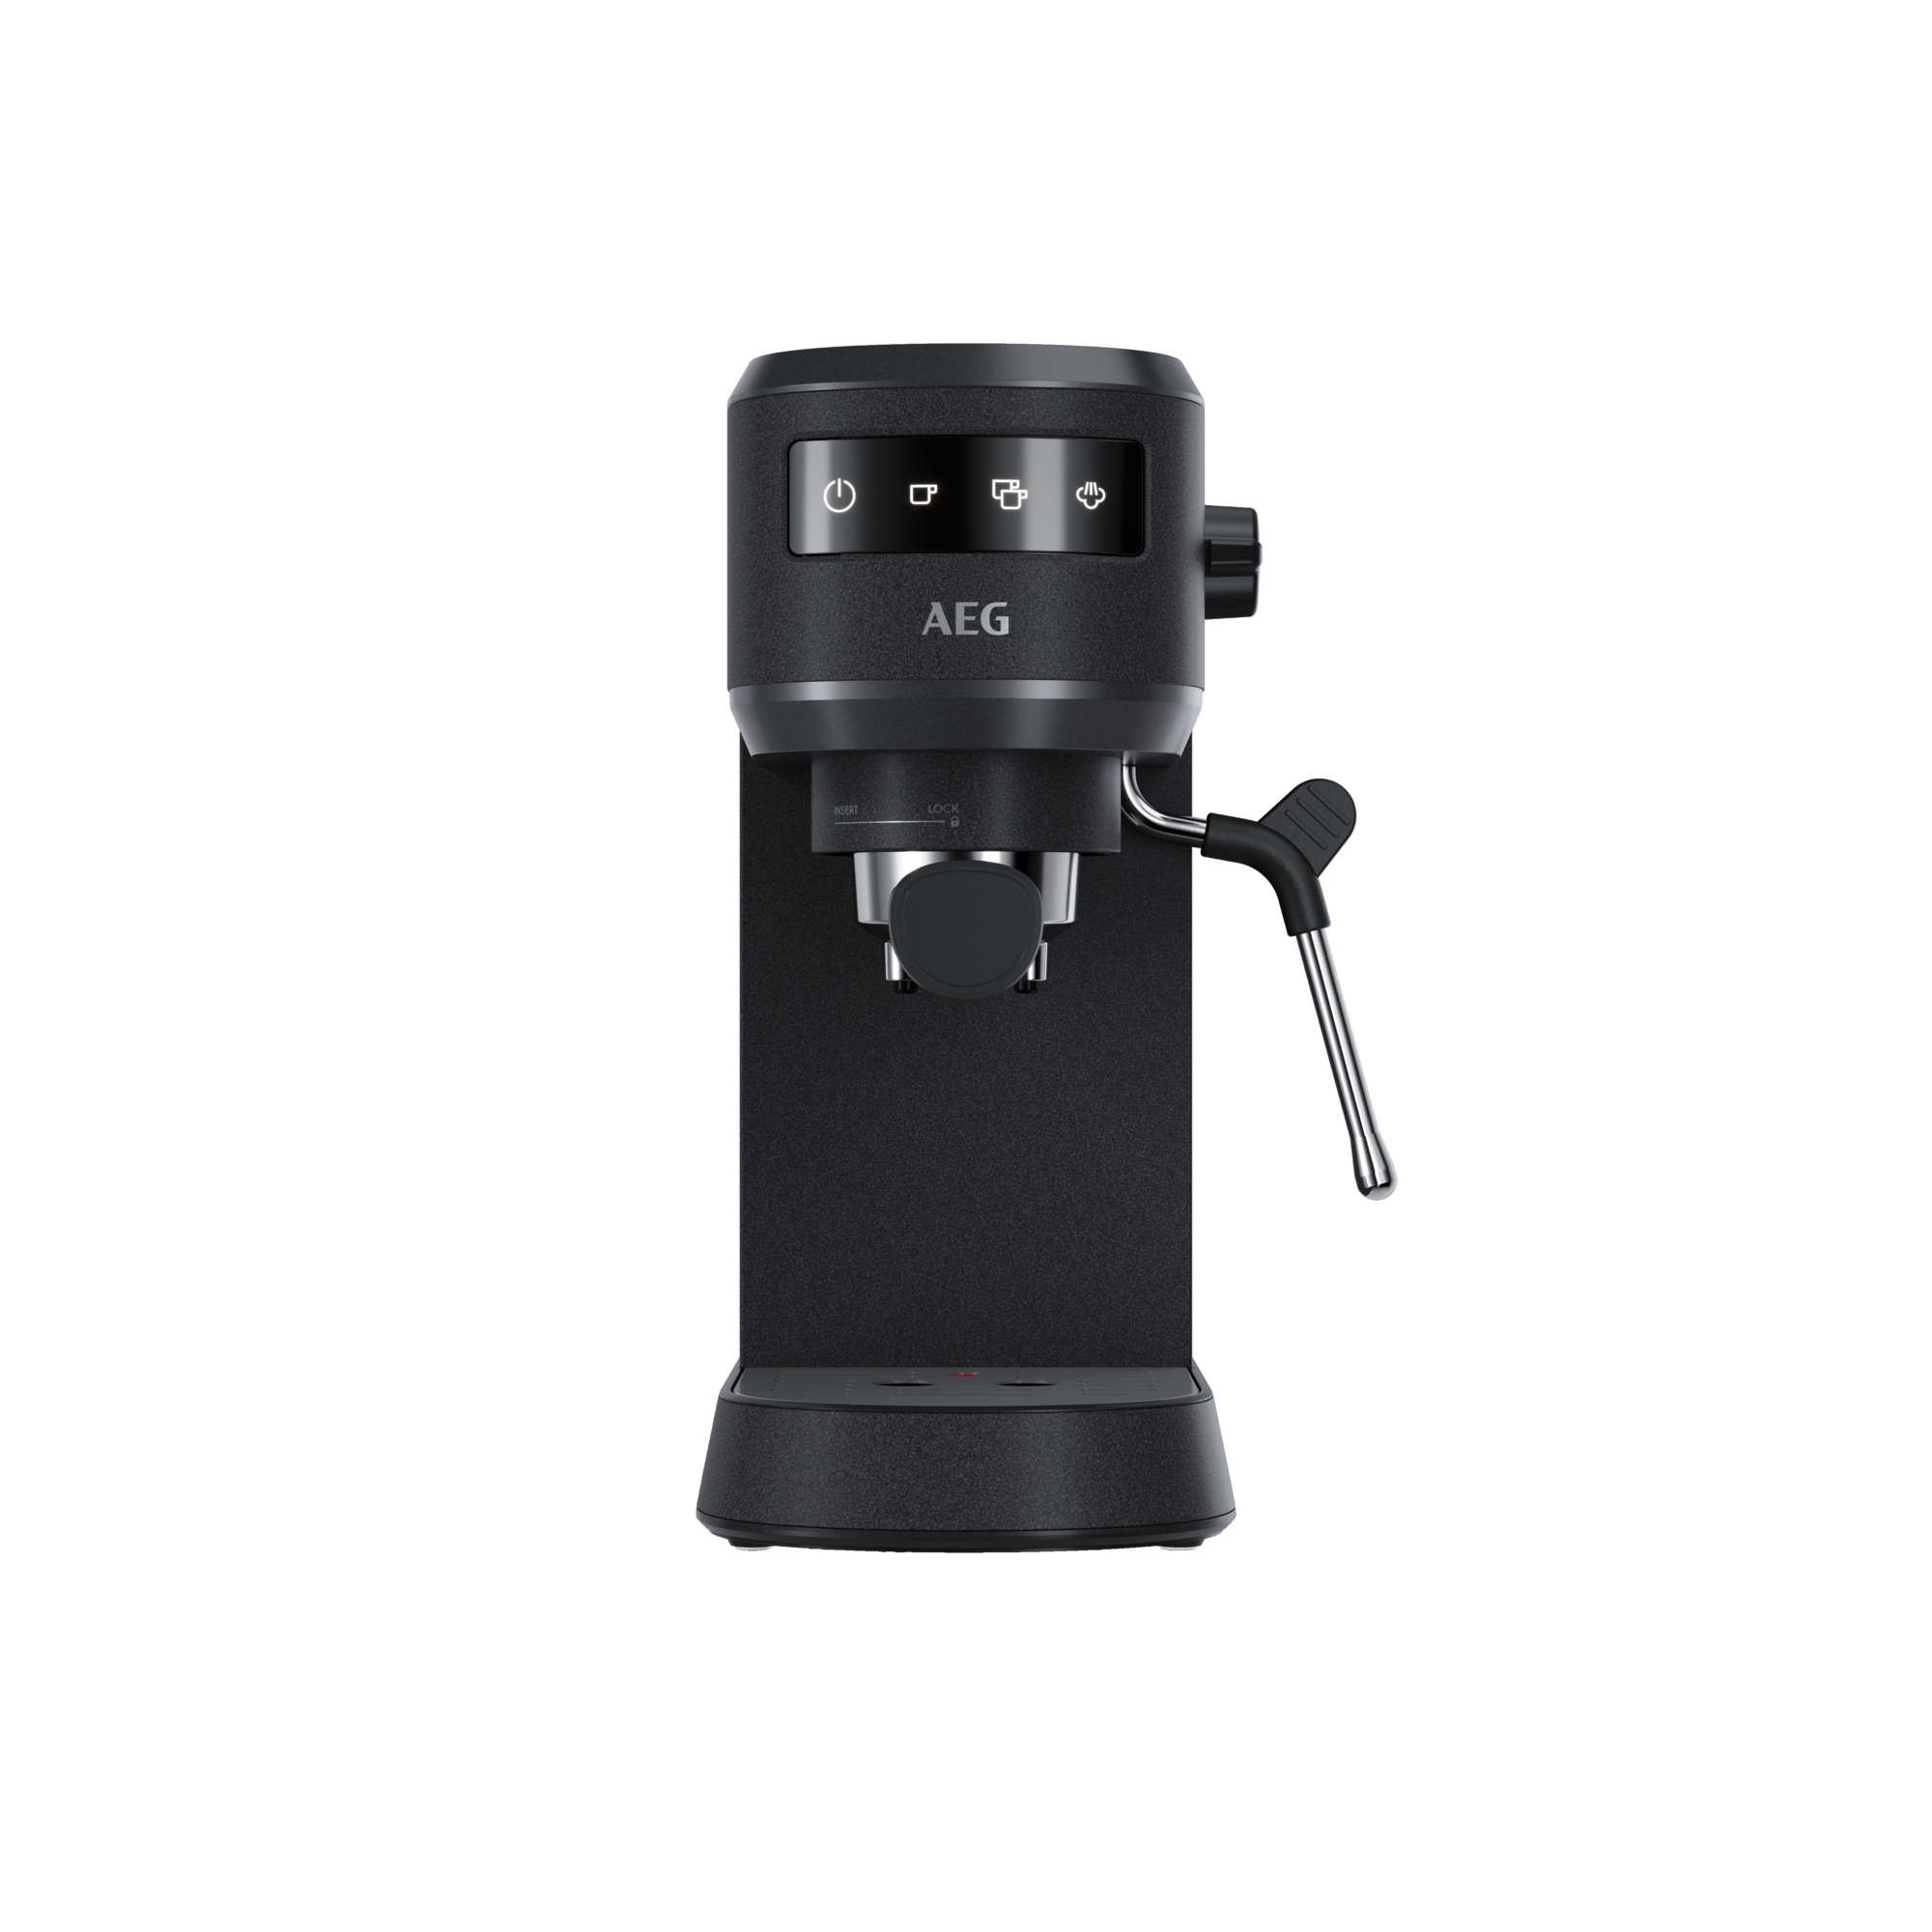 Black EC6-1-6BST Espressomaschine Black Pearl 6 AEG Gourmet Siebträgermaschine Pearl Espresso